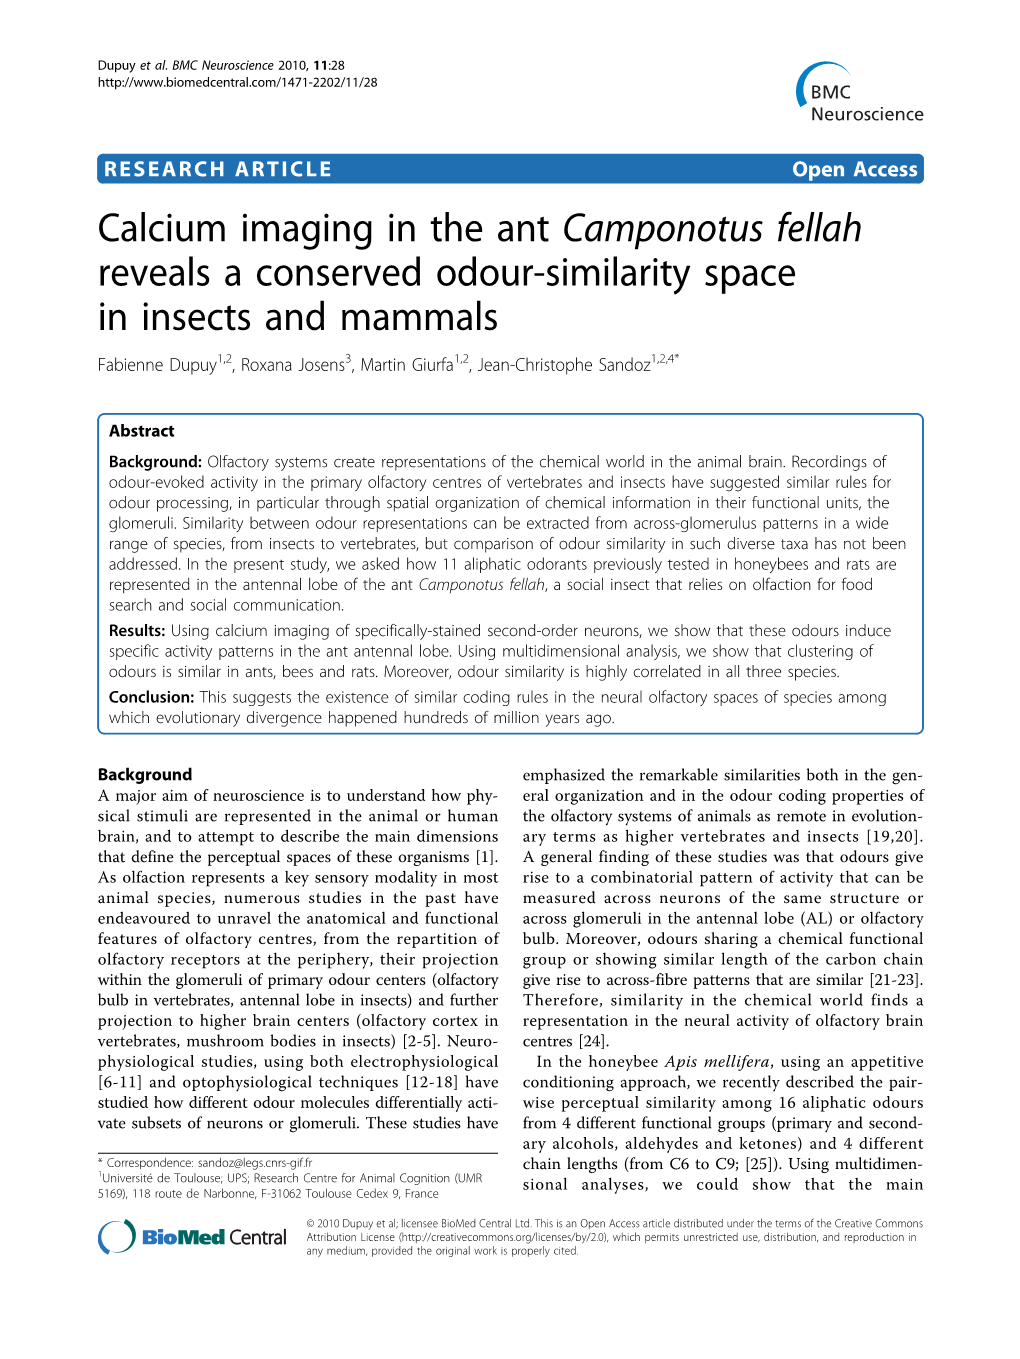 Calcium Imaging in the Ant Camponotus Fellah Reveals